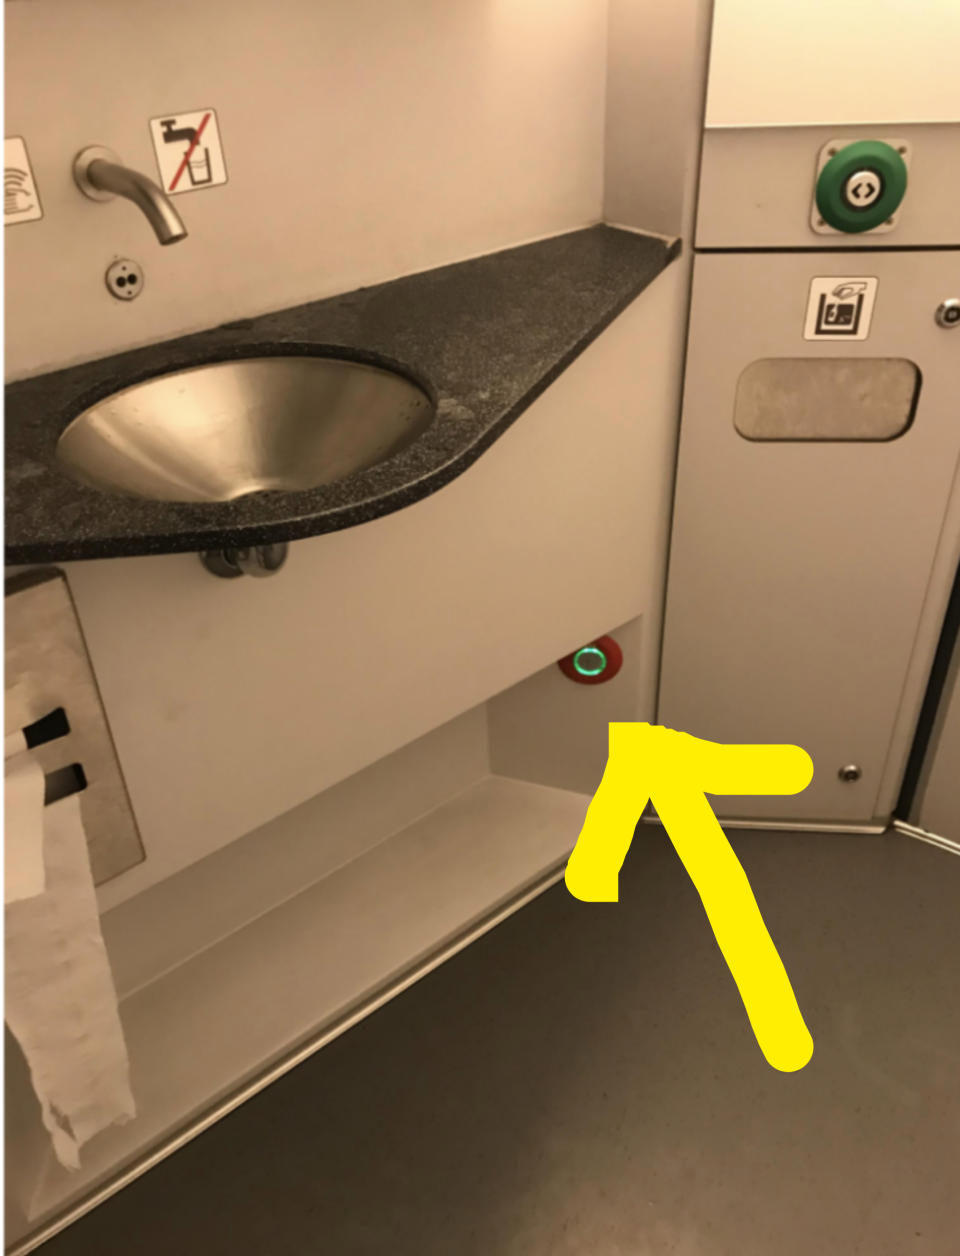 An arrow points out a button near the floor, hidden below the bathroom's sink